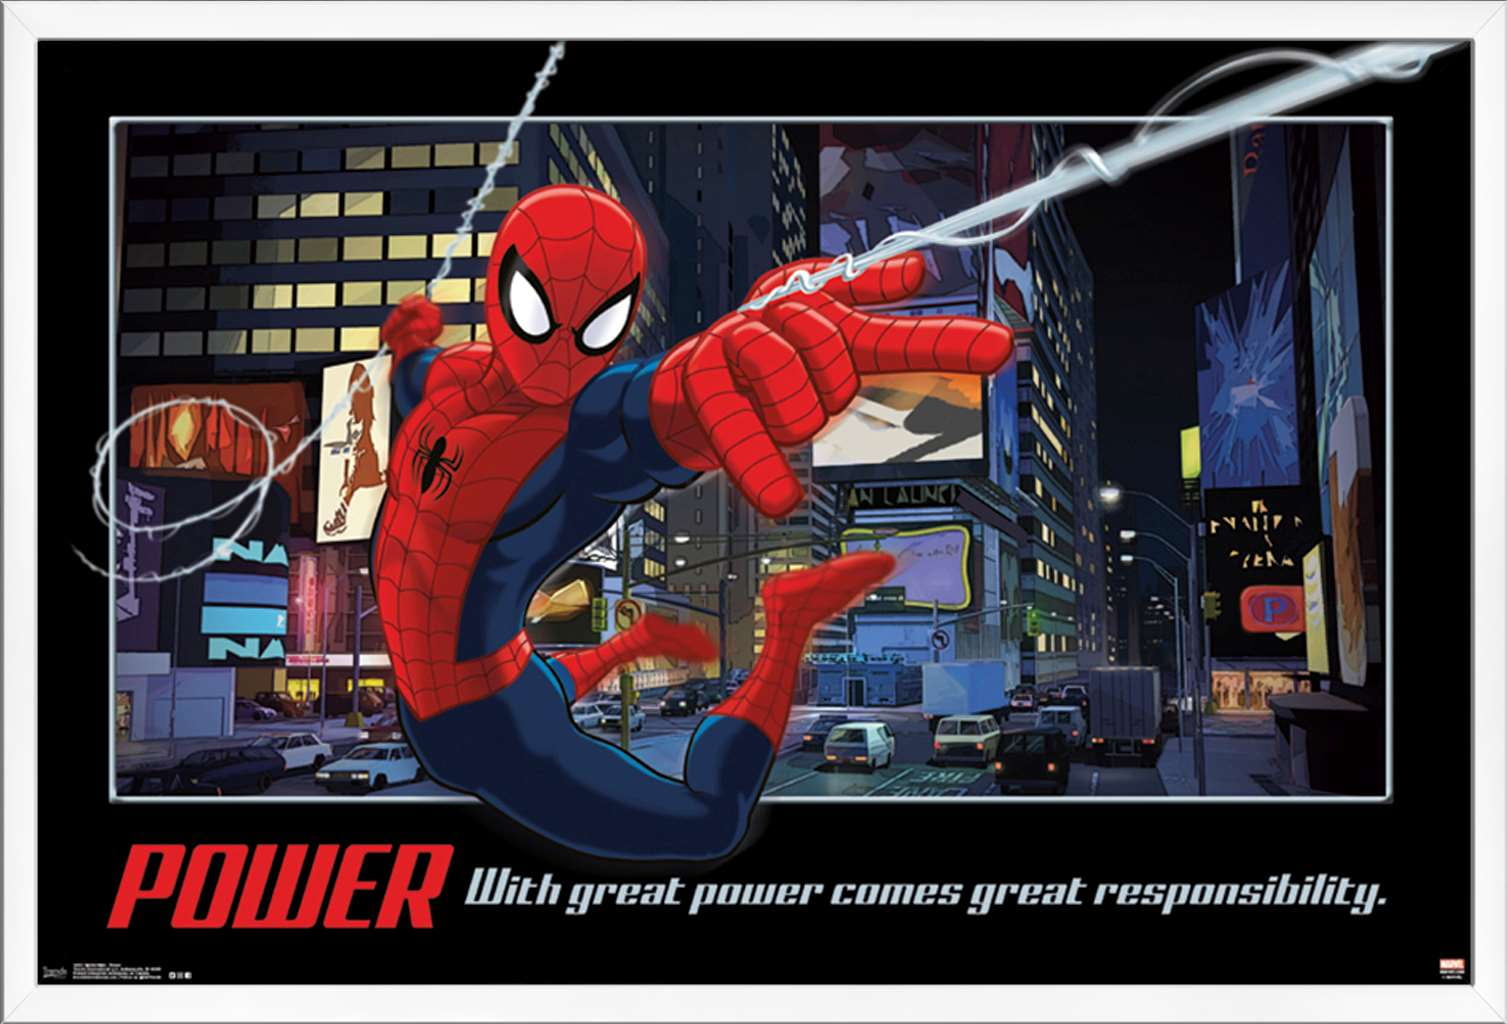 Trends International Marvel Spider-Man: Across The Spider-Verse - Trio  Framed Wall Poster Prints White Framed Version 22.375 x 34